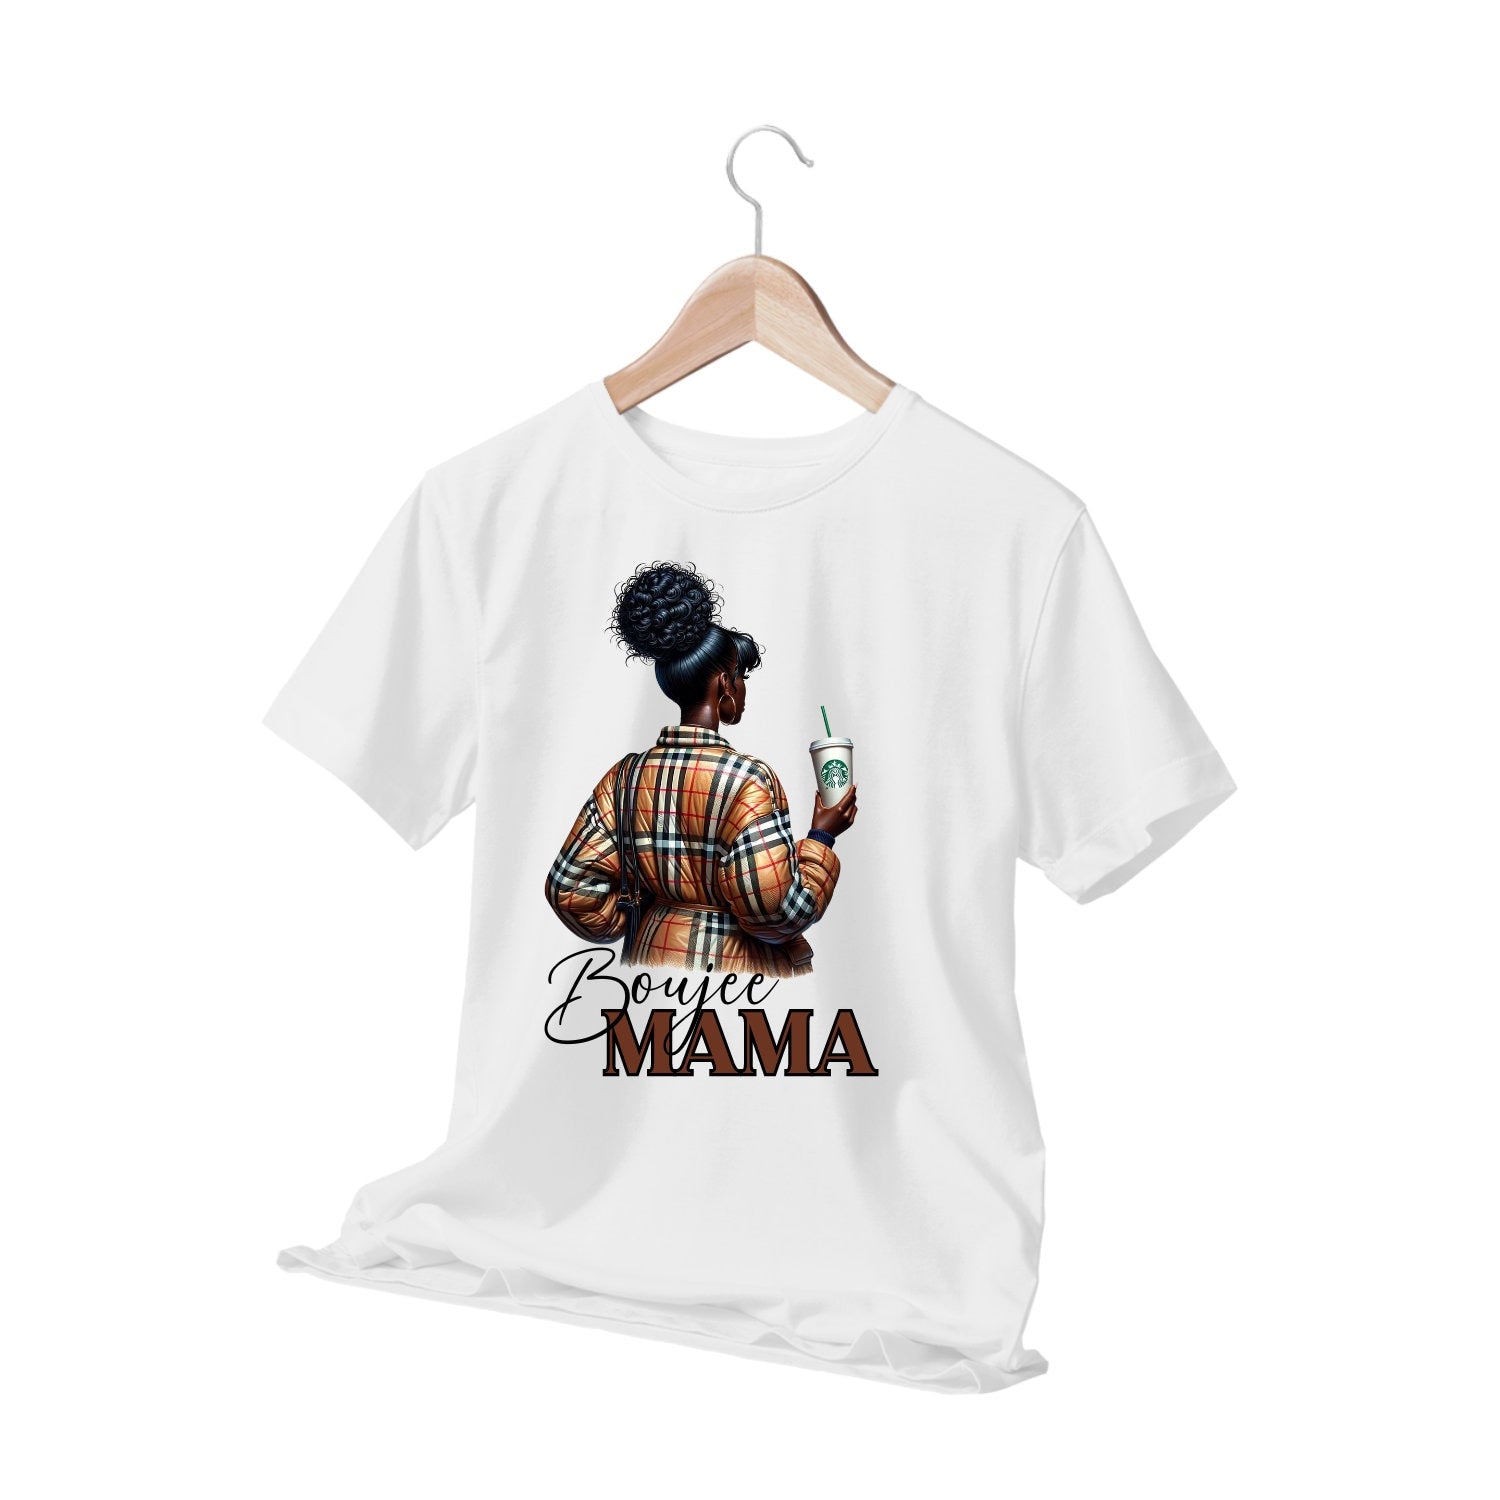 Boujee Mama T-shirt | Graphic Tee | T-shirt | Melanin t-shirt| Black girl shirt | Quote t-shirt | Pretty shirt | Urban t shirt| Mama t-shirt